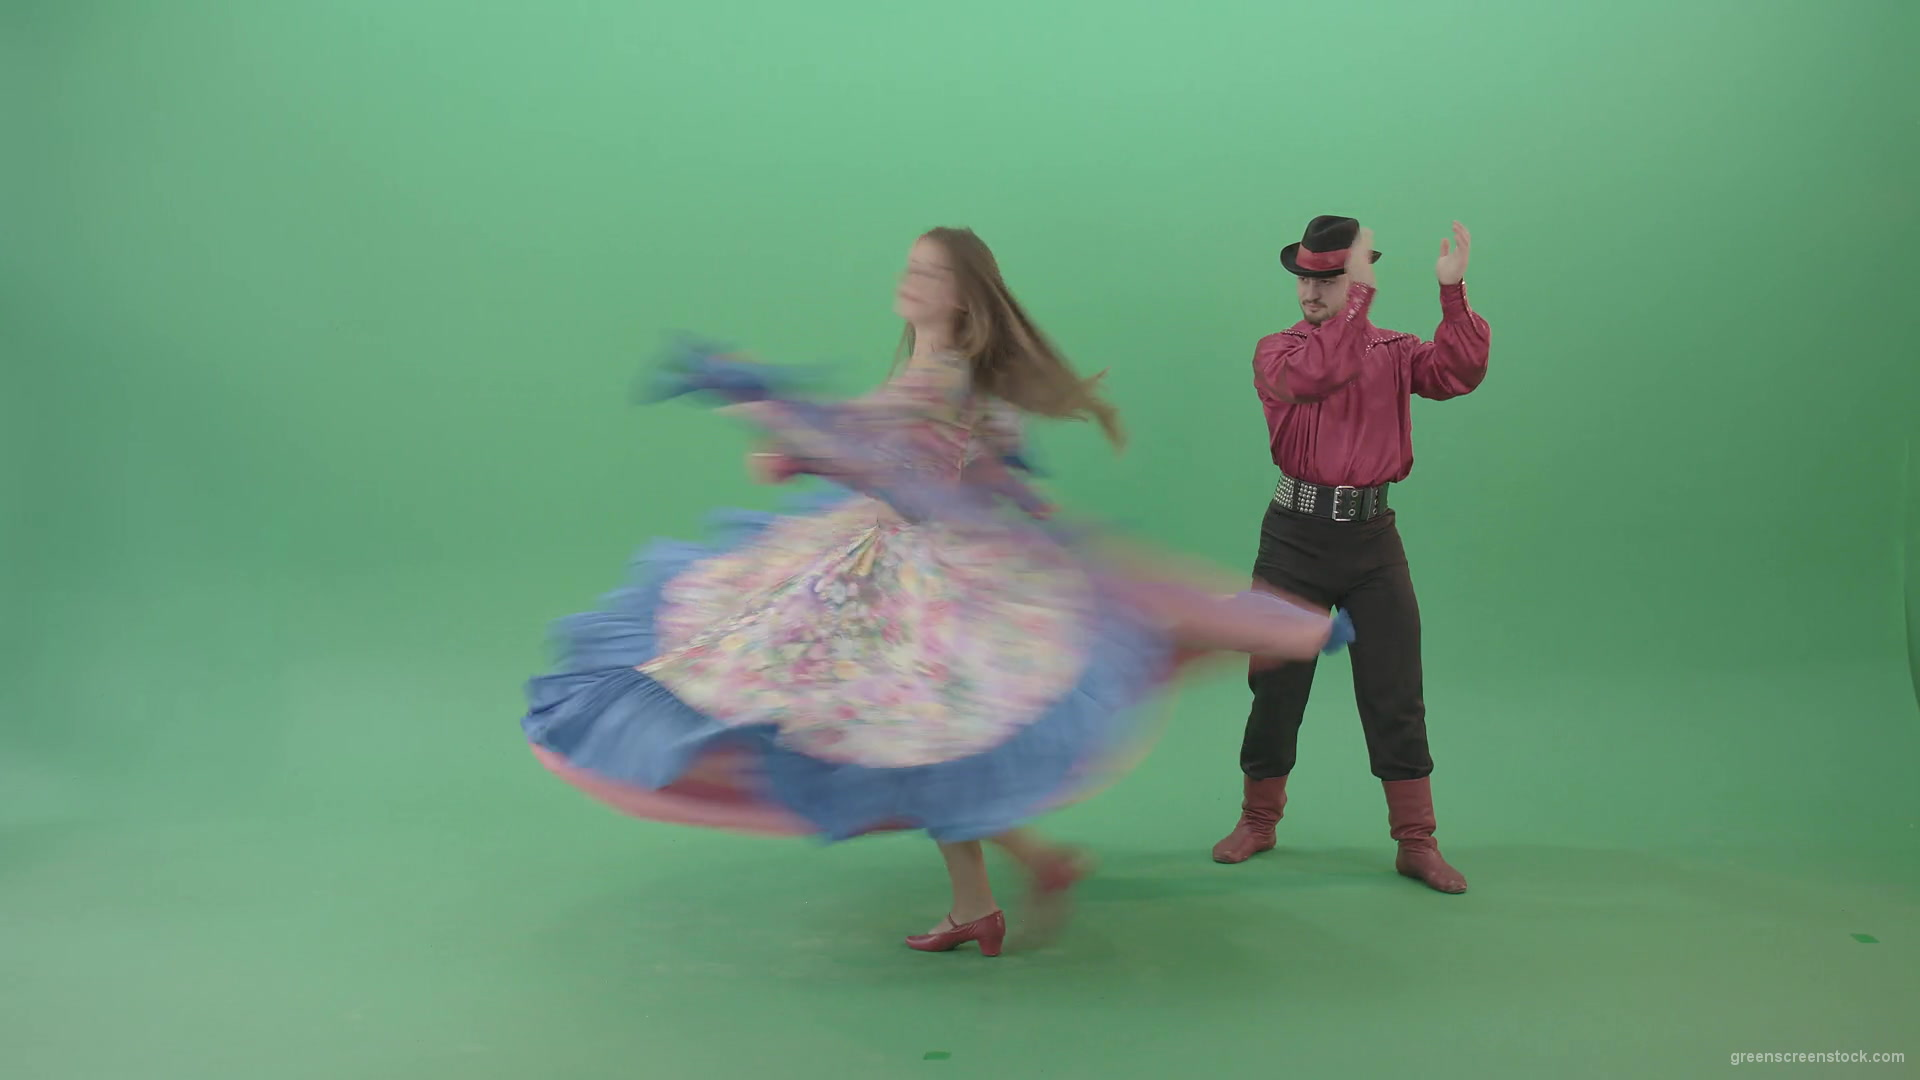 Balkan-couple-dance-hot-folk-dance-in-gypsy-comstumes-in-green-screen-studio-4K-Video-Footage-1920_005 Green Screen Stock